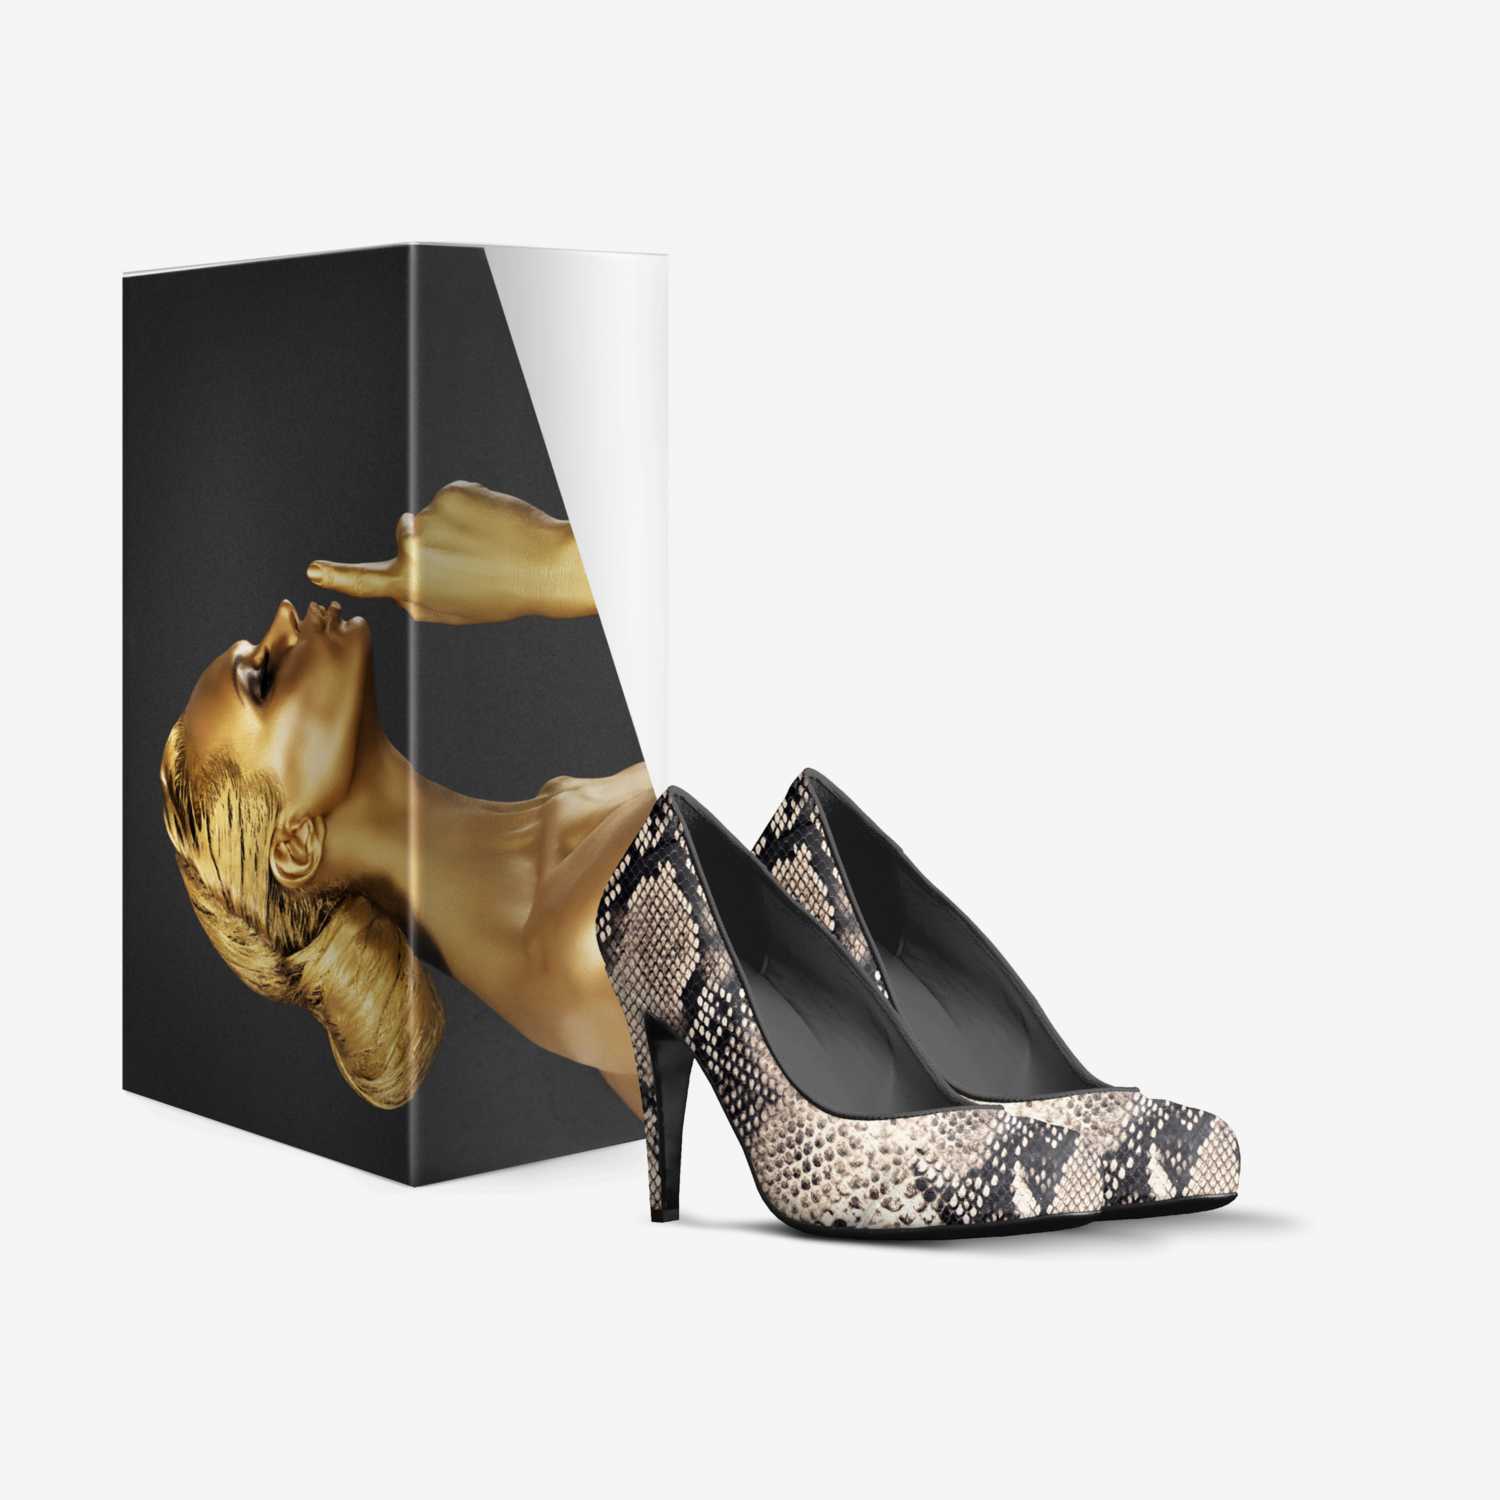 Wisetoes custom made in Italy shoes by Sherri Wiseman | Box view